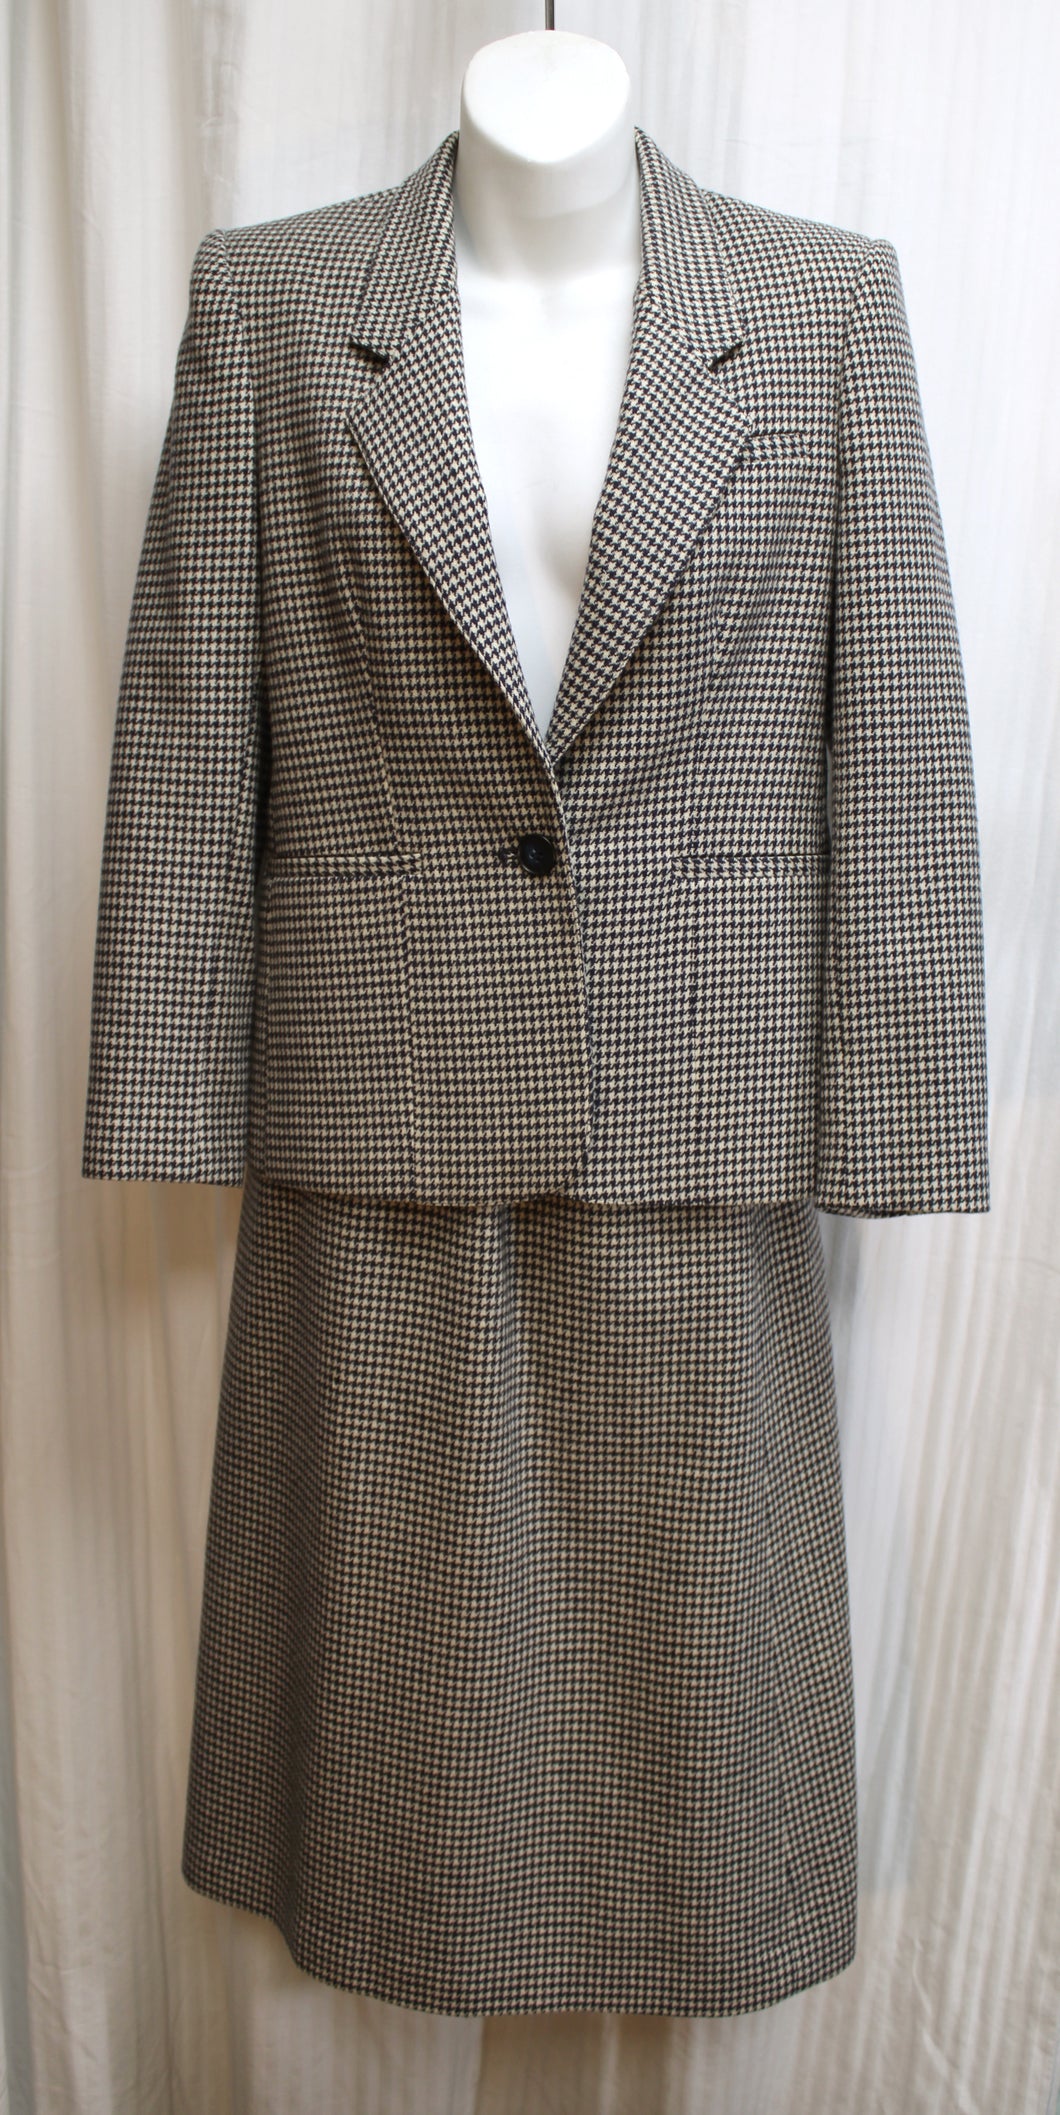 Vintage - Evan-Picone Petites - 100% Merino Wool Navy & White Houndstooth Check Skirt Suit - Size 4 (See Measurements)